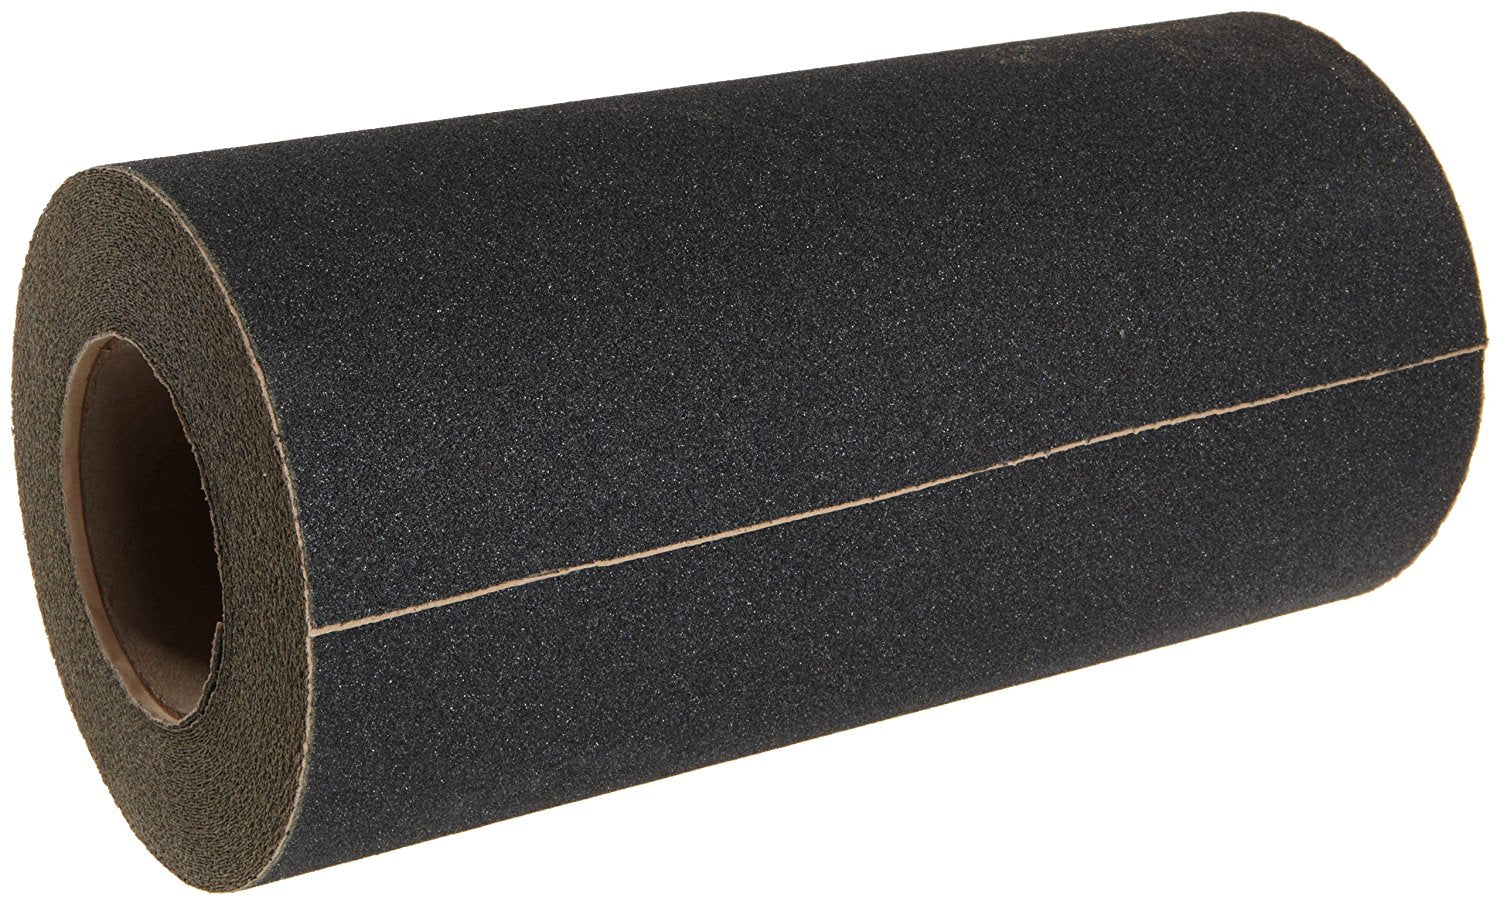 12" X 60' BLACK Abrasive 80 Grit Tape - Case of 2 Rolls